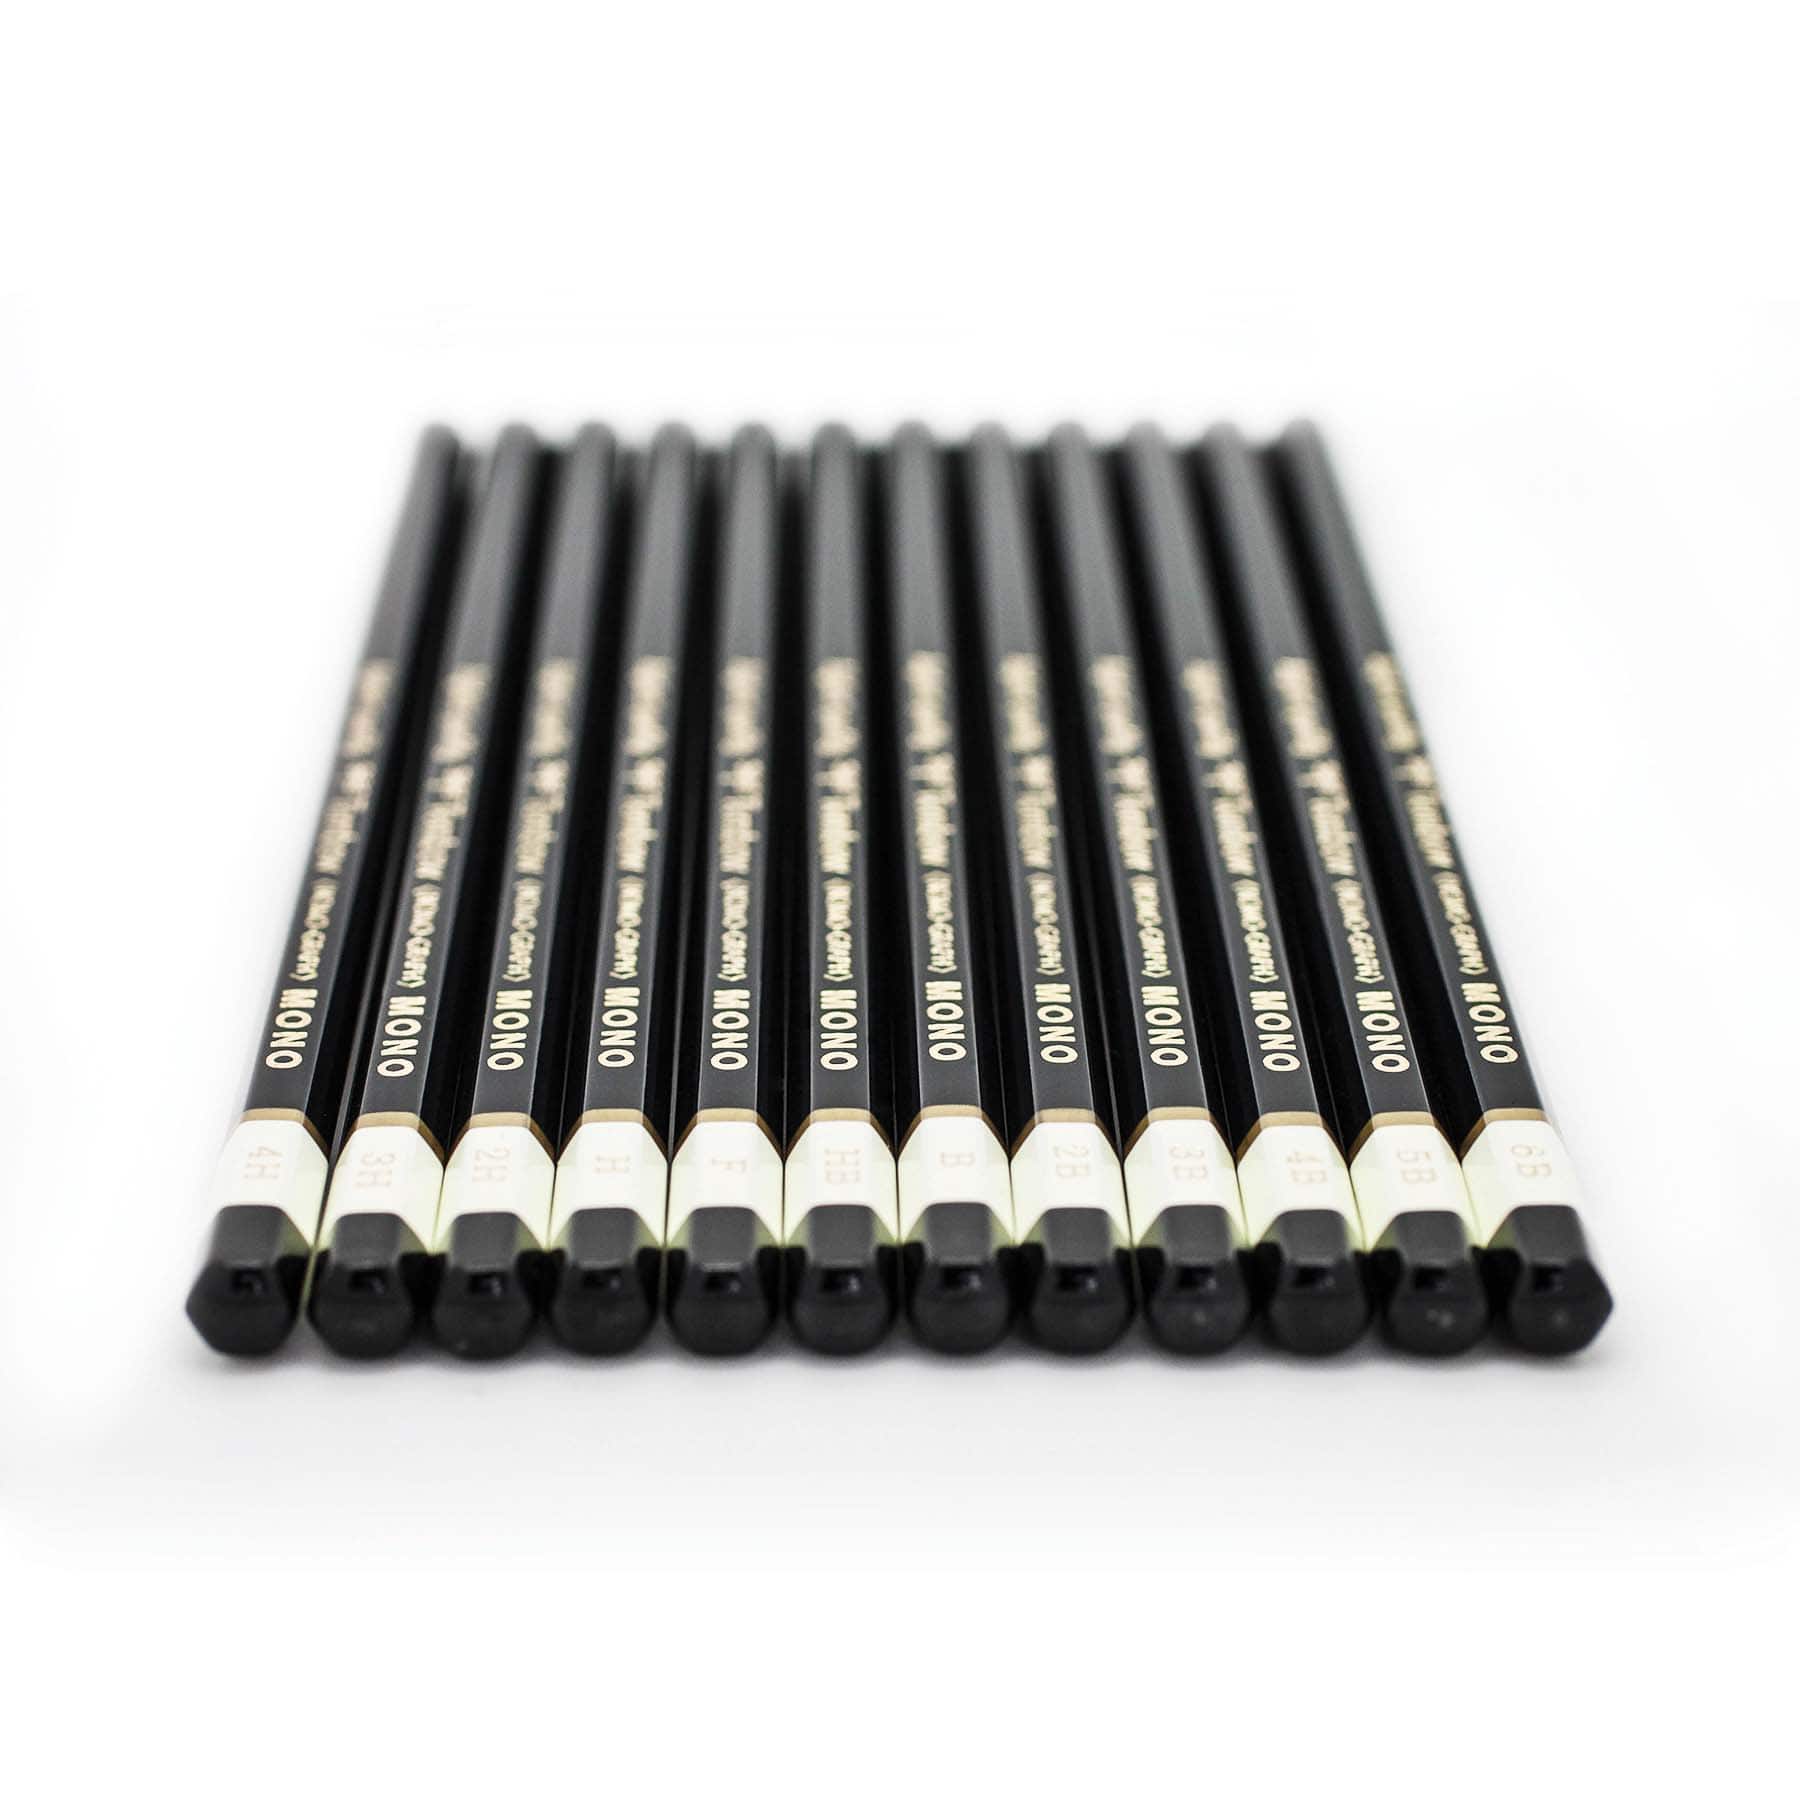 Tombow Mono Professional Drawing 12 Pencil Set